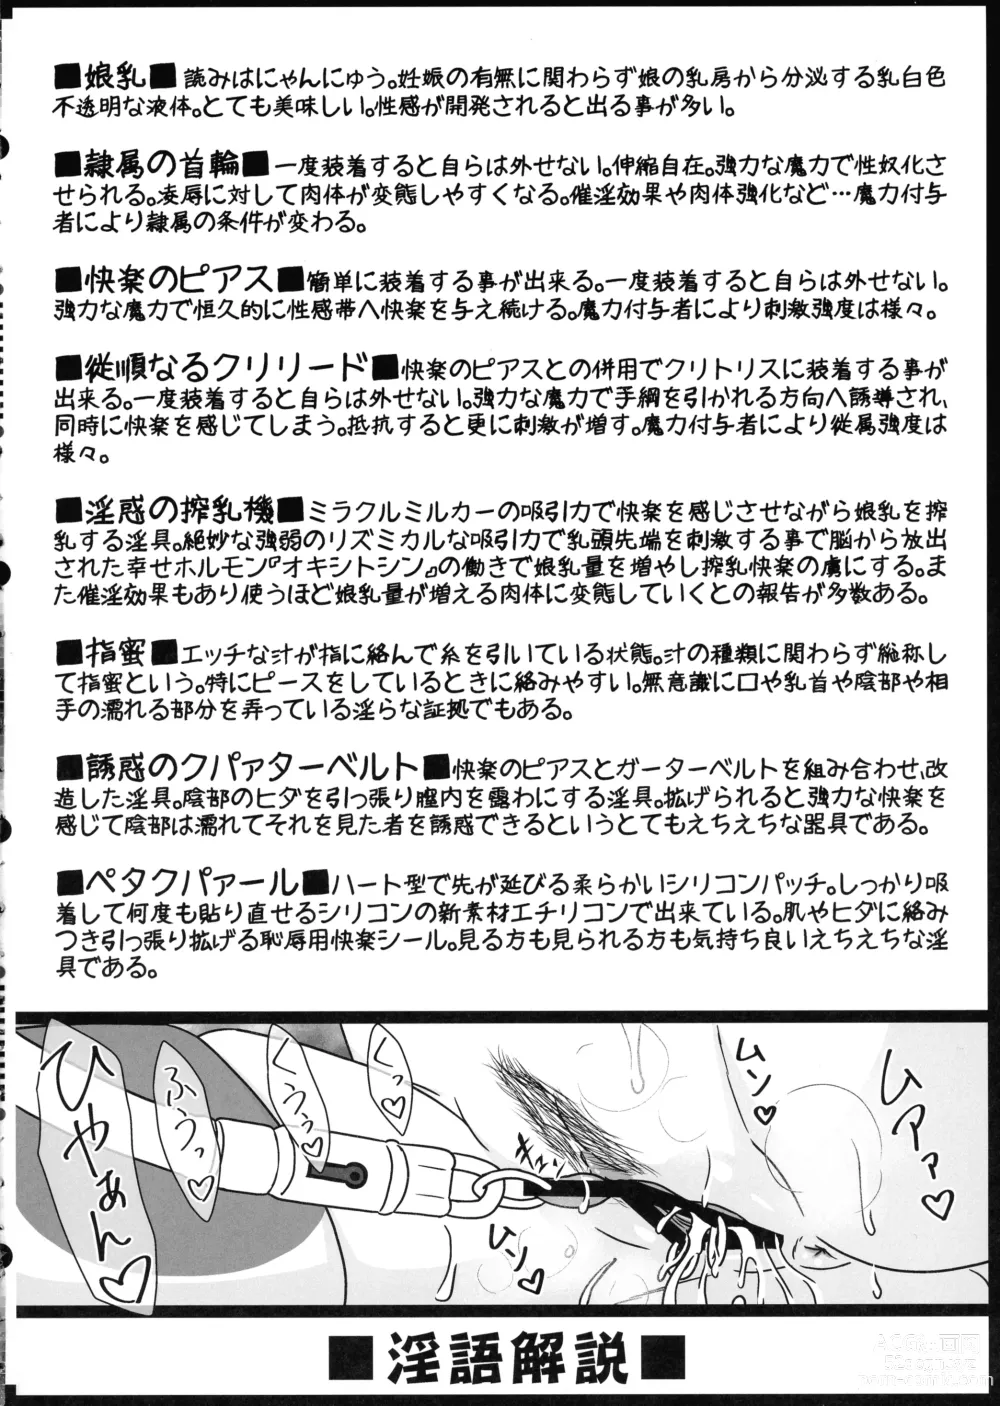 Page 4 of doujinshi Bokuchiku Zetchou Ushiko! Kotegawa Yui